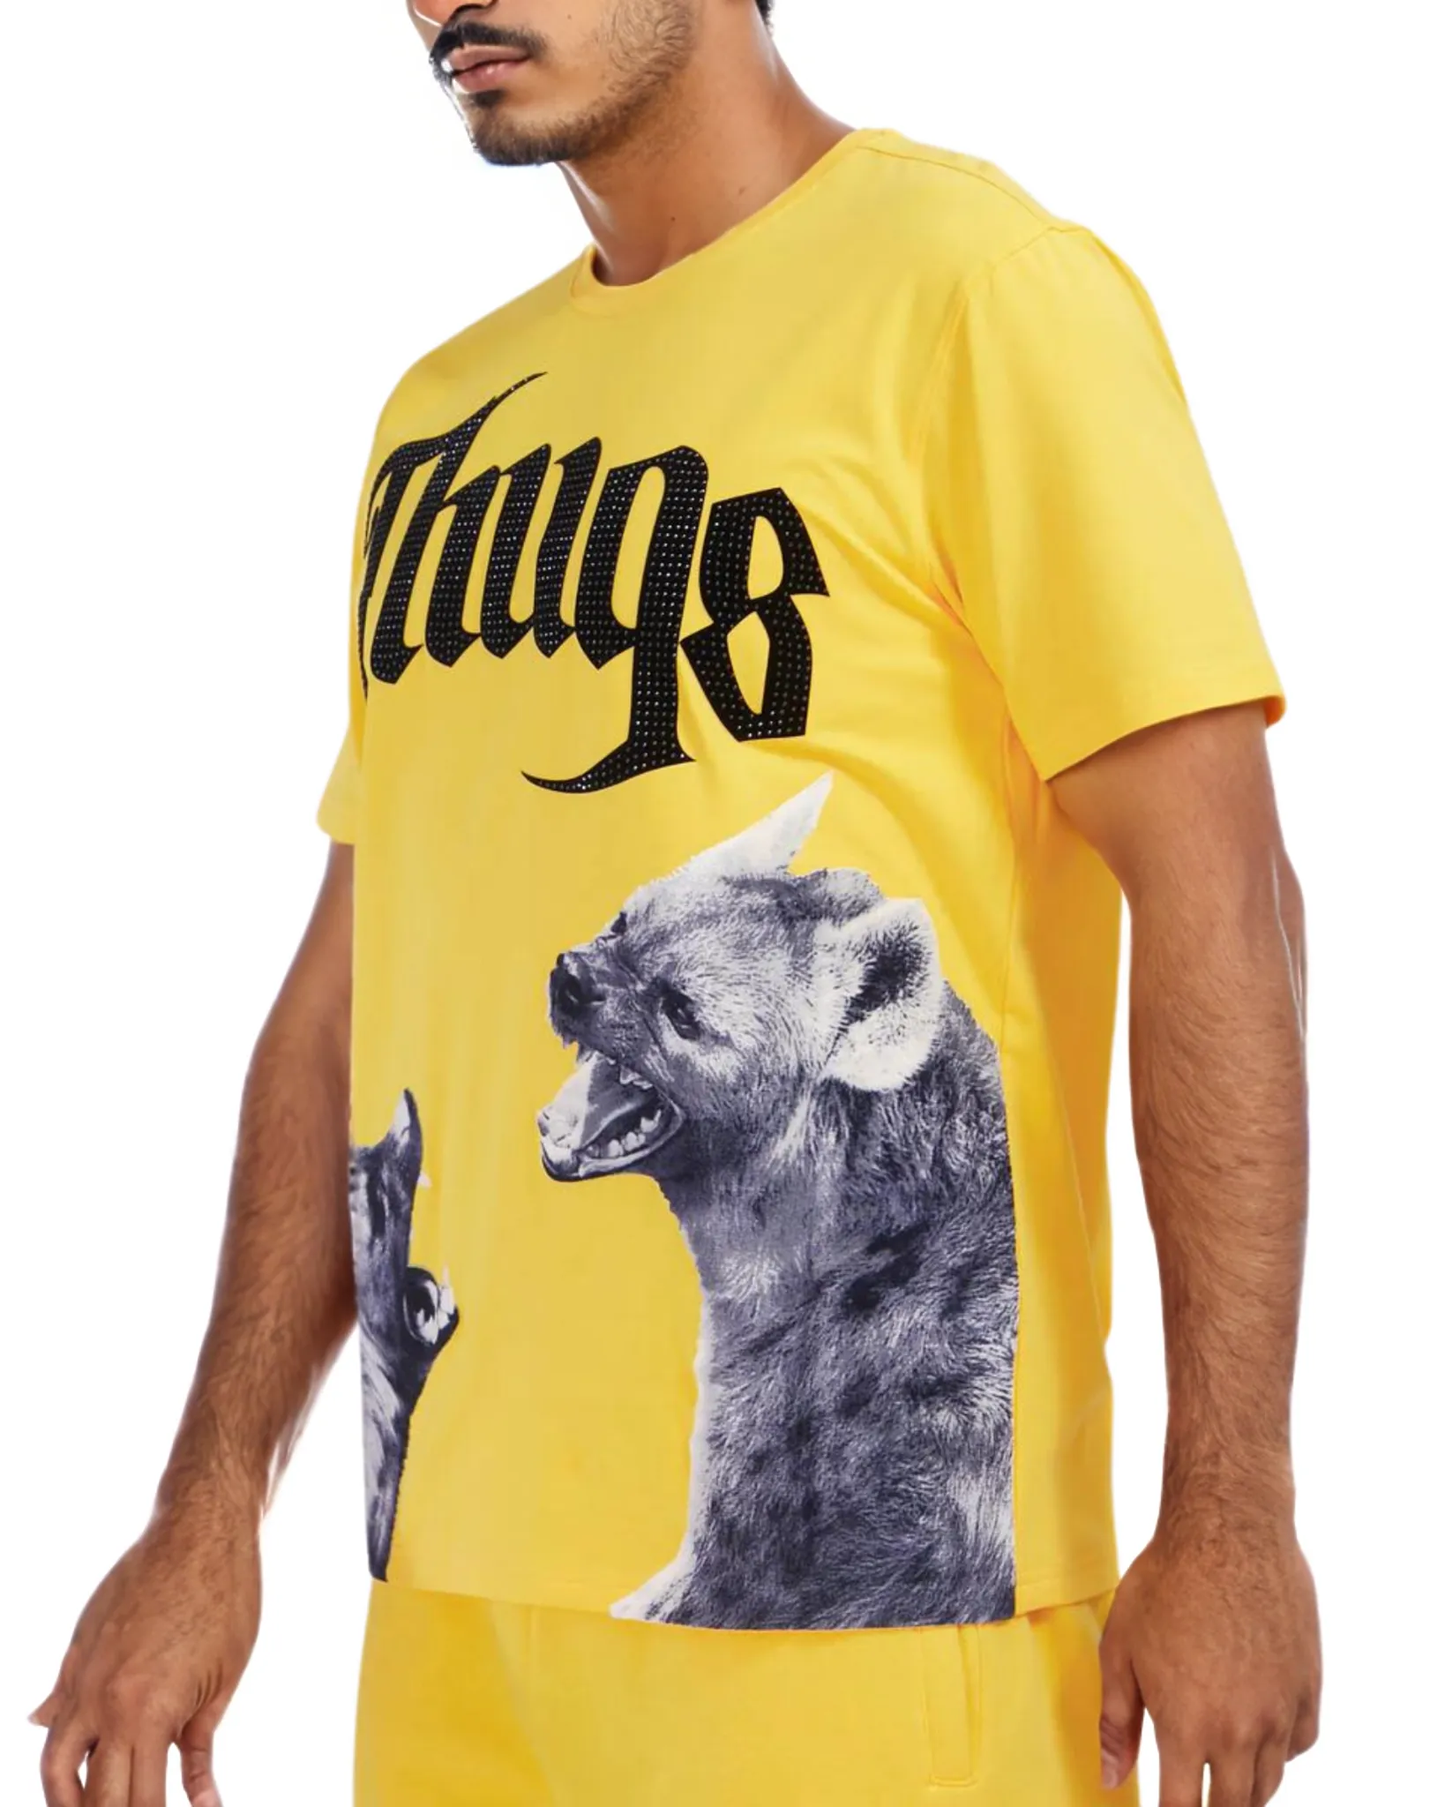 Thugs Shirt